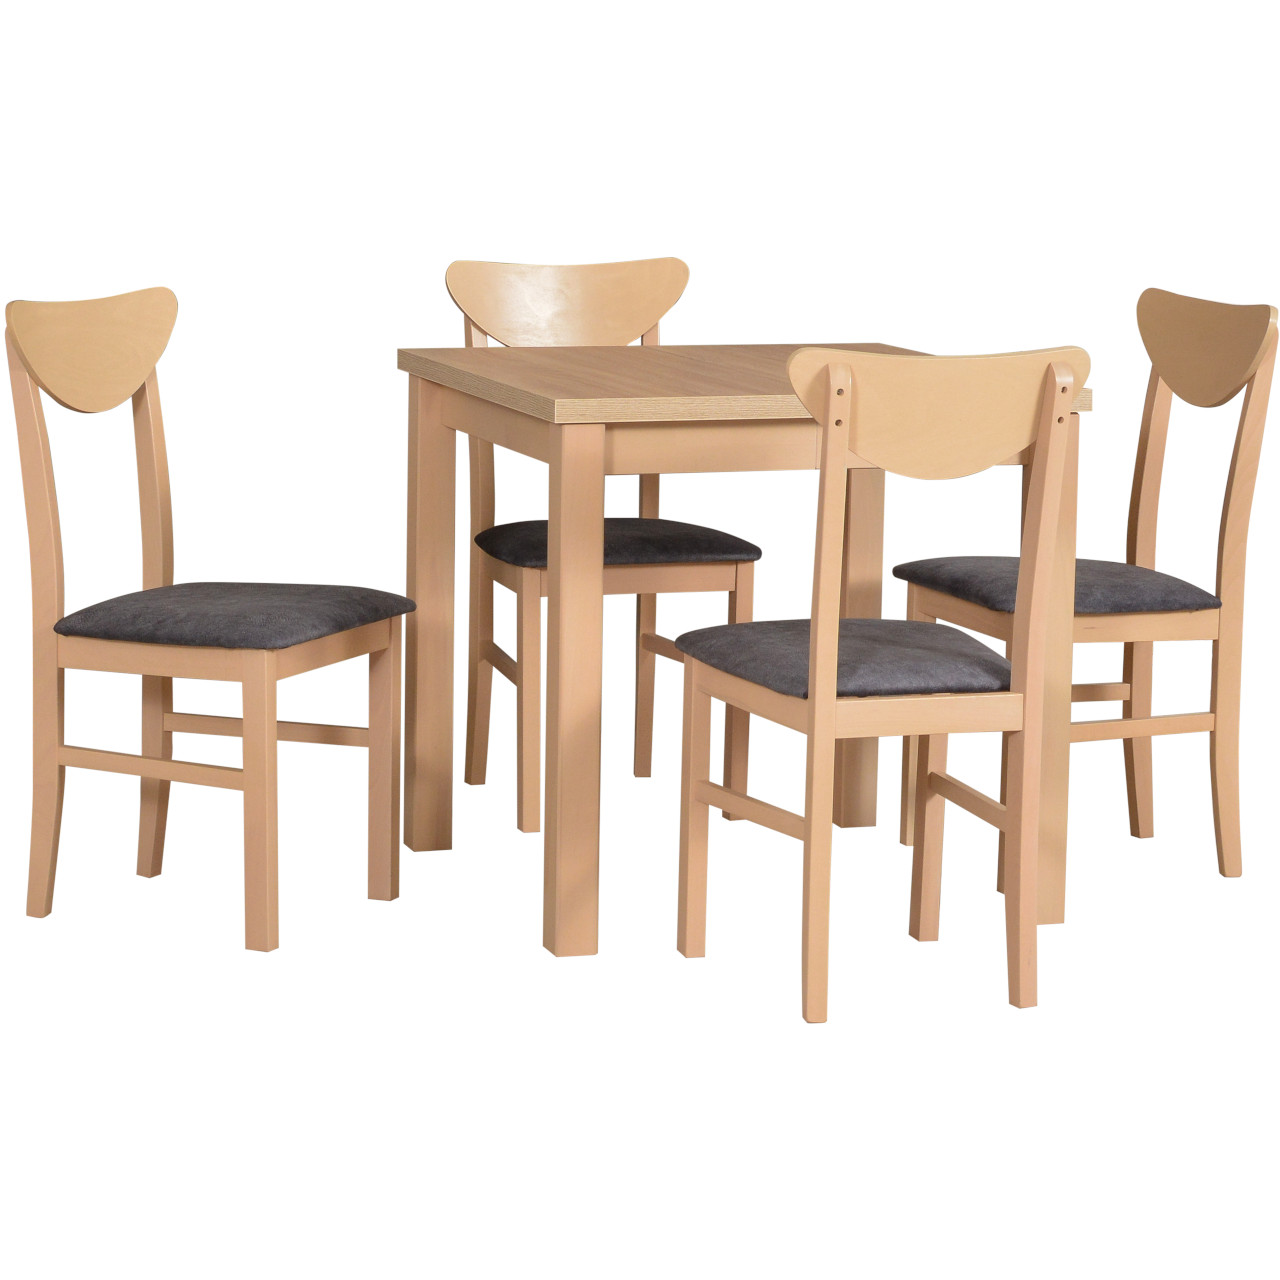 Table MAX 8 sonoma laminate + chairs LEO 2 (4 pcs.) sonoma / 16B